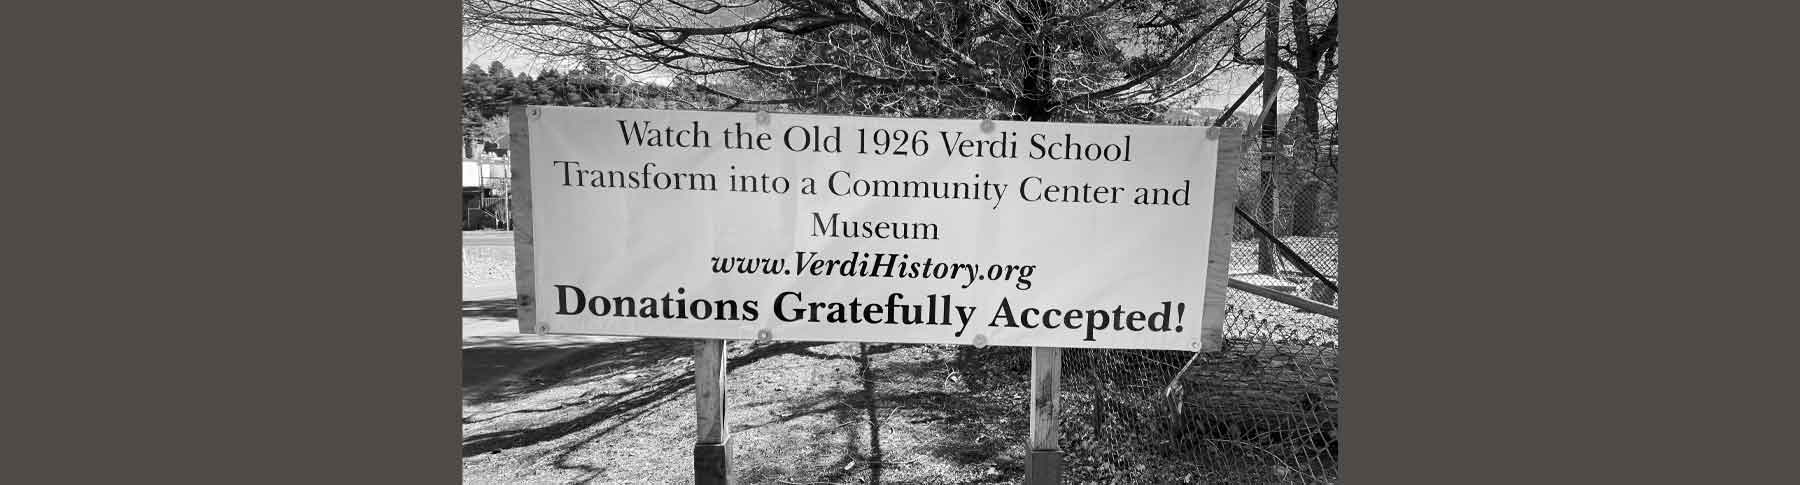 The 1926 Verdi School Restoration Project circa2020-donation sign